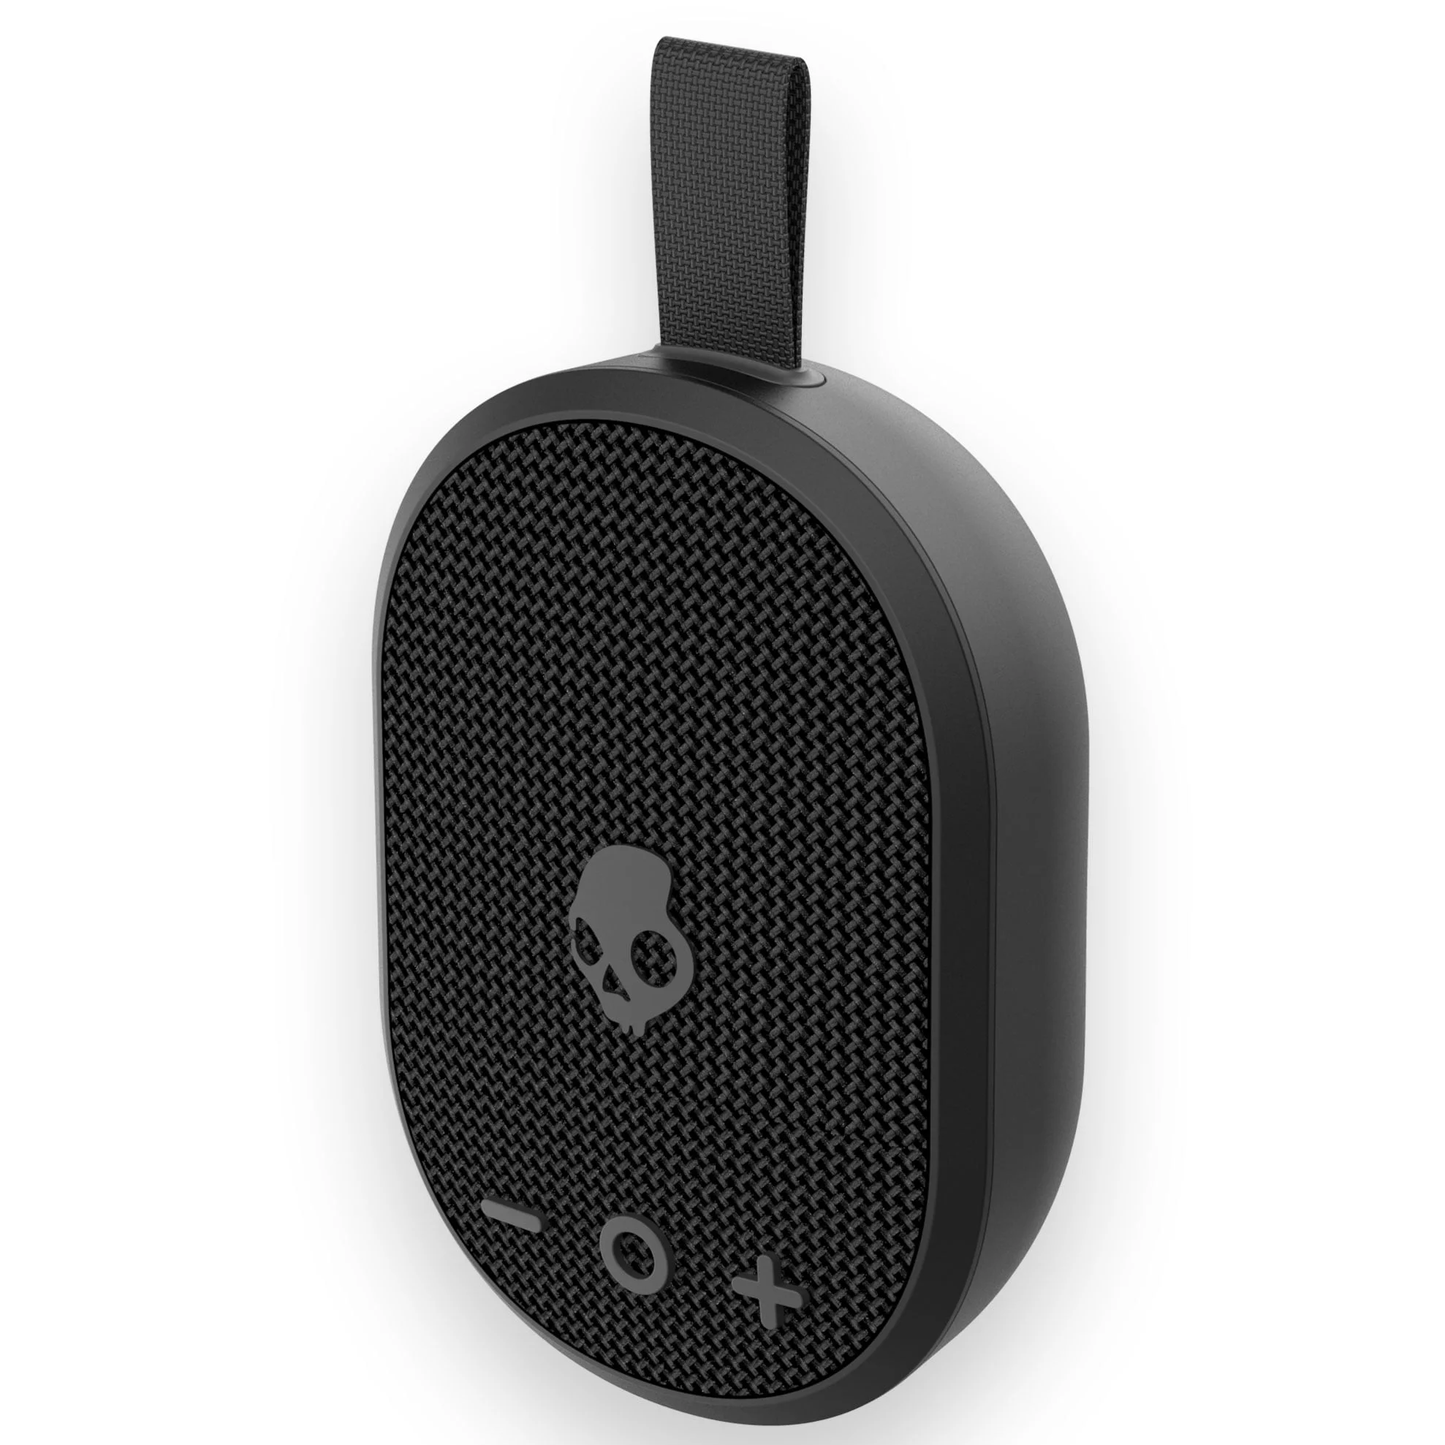 Skullcandy Ounce Compact Wireless Speaker